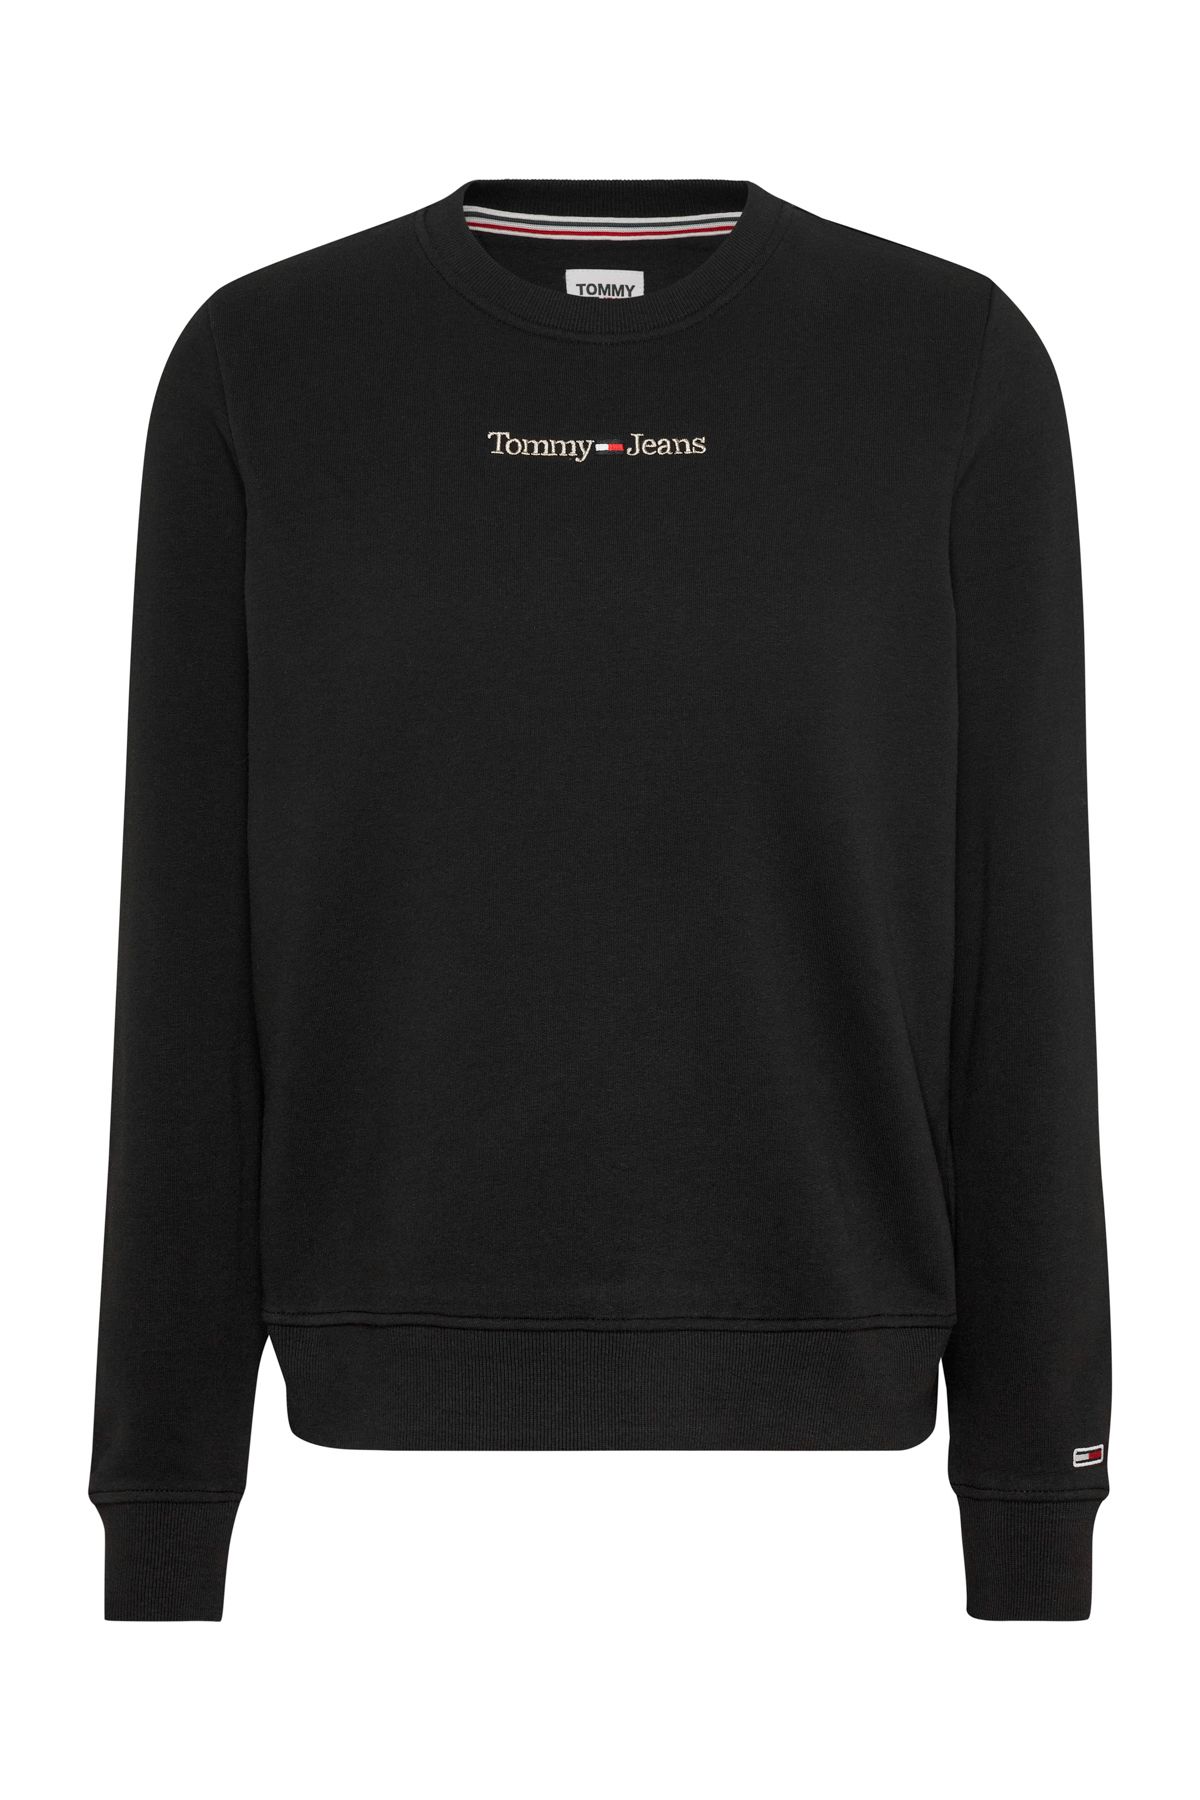 Regular Black - Trendyol - Tommy Hilfiger Sweatshirt fit -